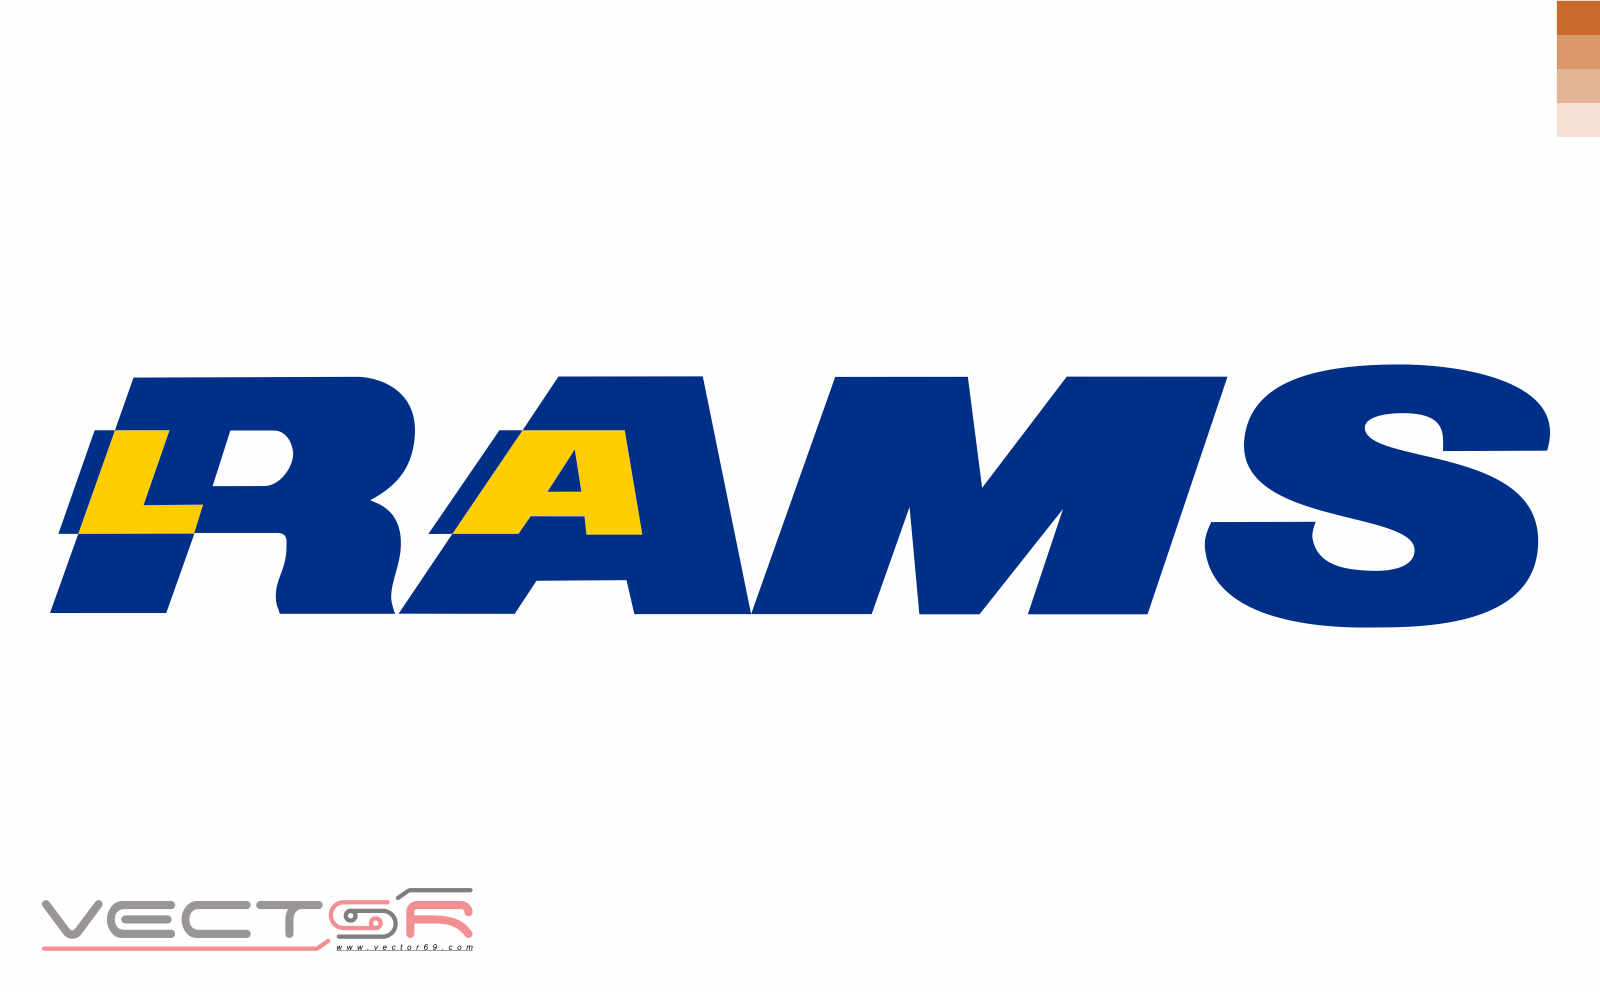 Los Angeles Rams (1984-1988) Logo - Download Vector File AI (Adobe Illustrator)